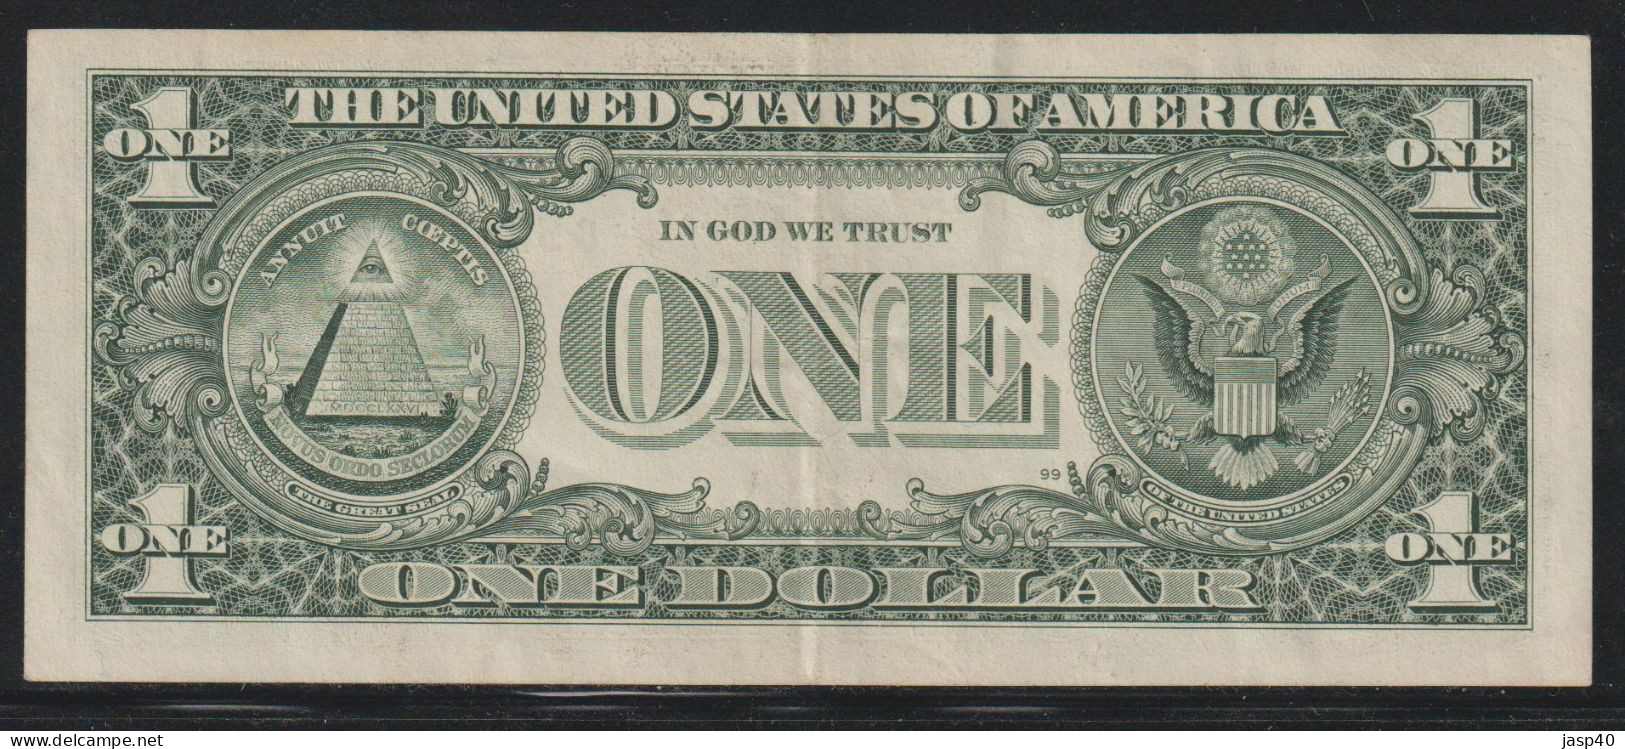 ESTADOS UNIDOS - 1 DOLAR DE 1988 - Billets Des États-Unis (1928-1953)